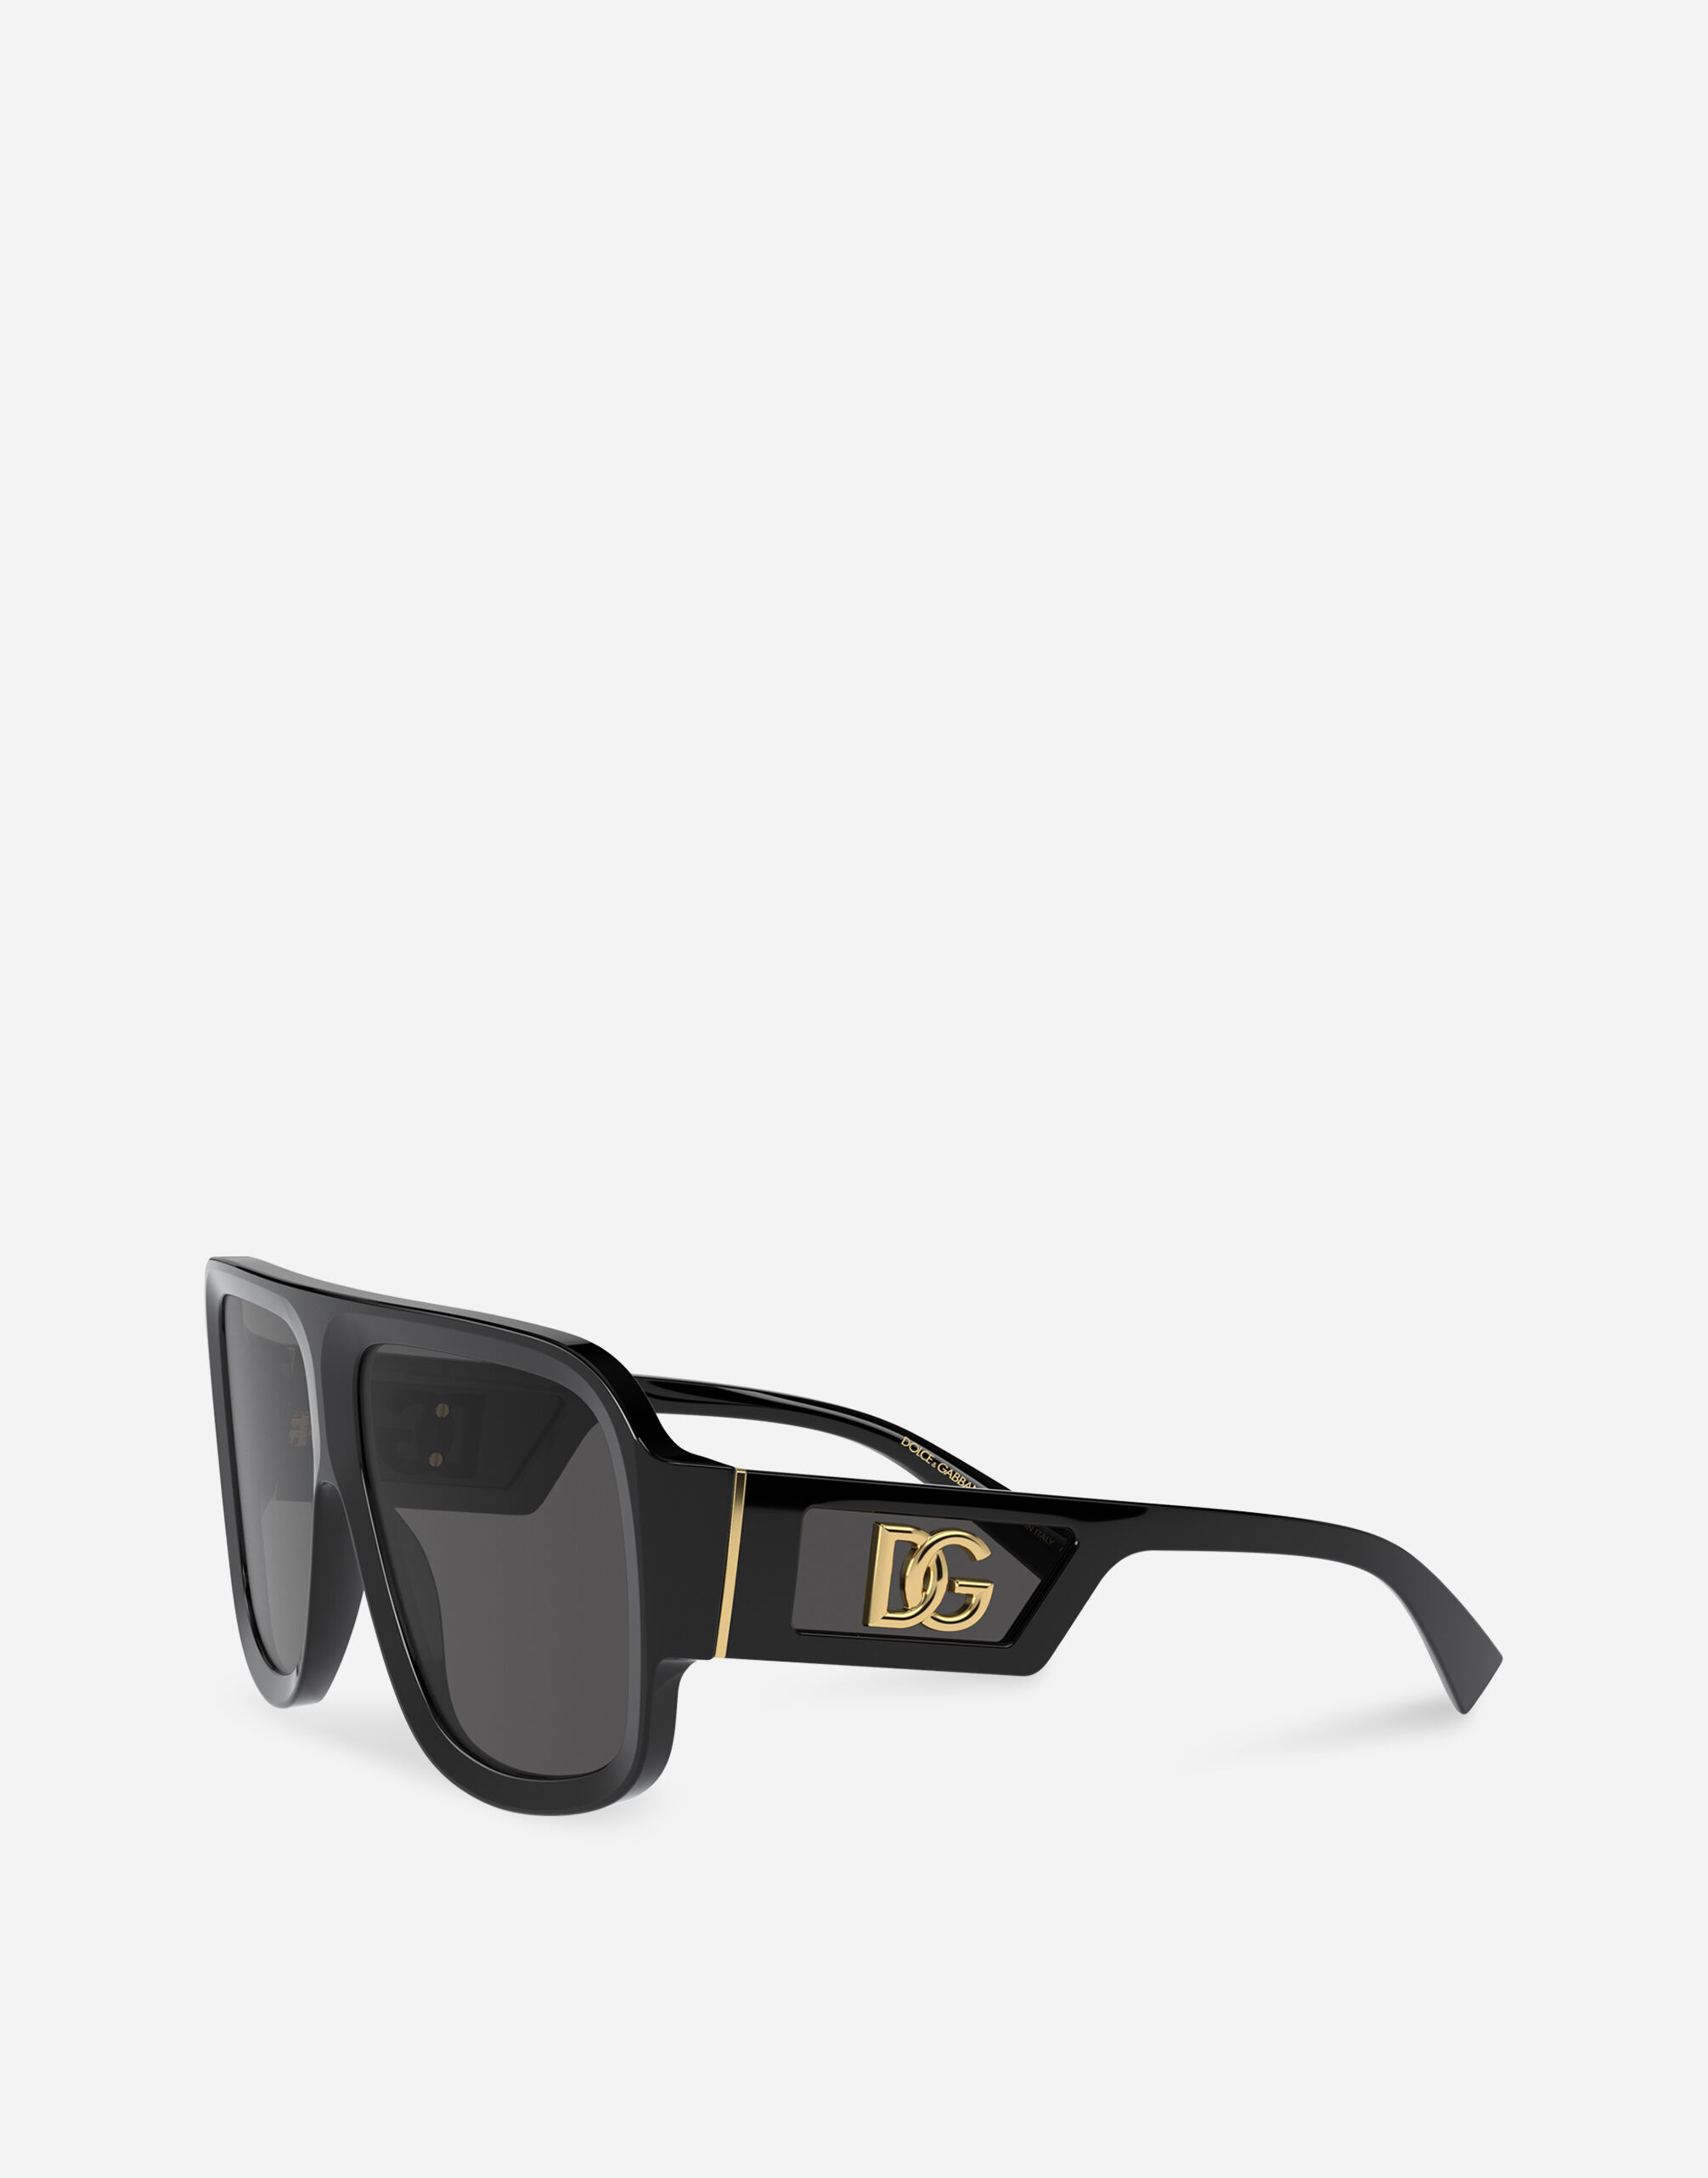 DG Crossed sunglasses in Black for | Dolce&Gabbana® US